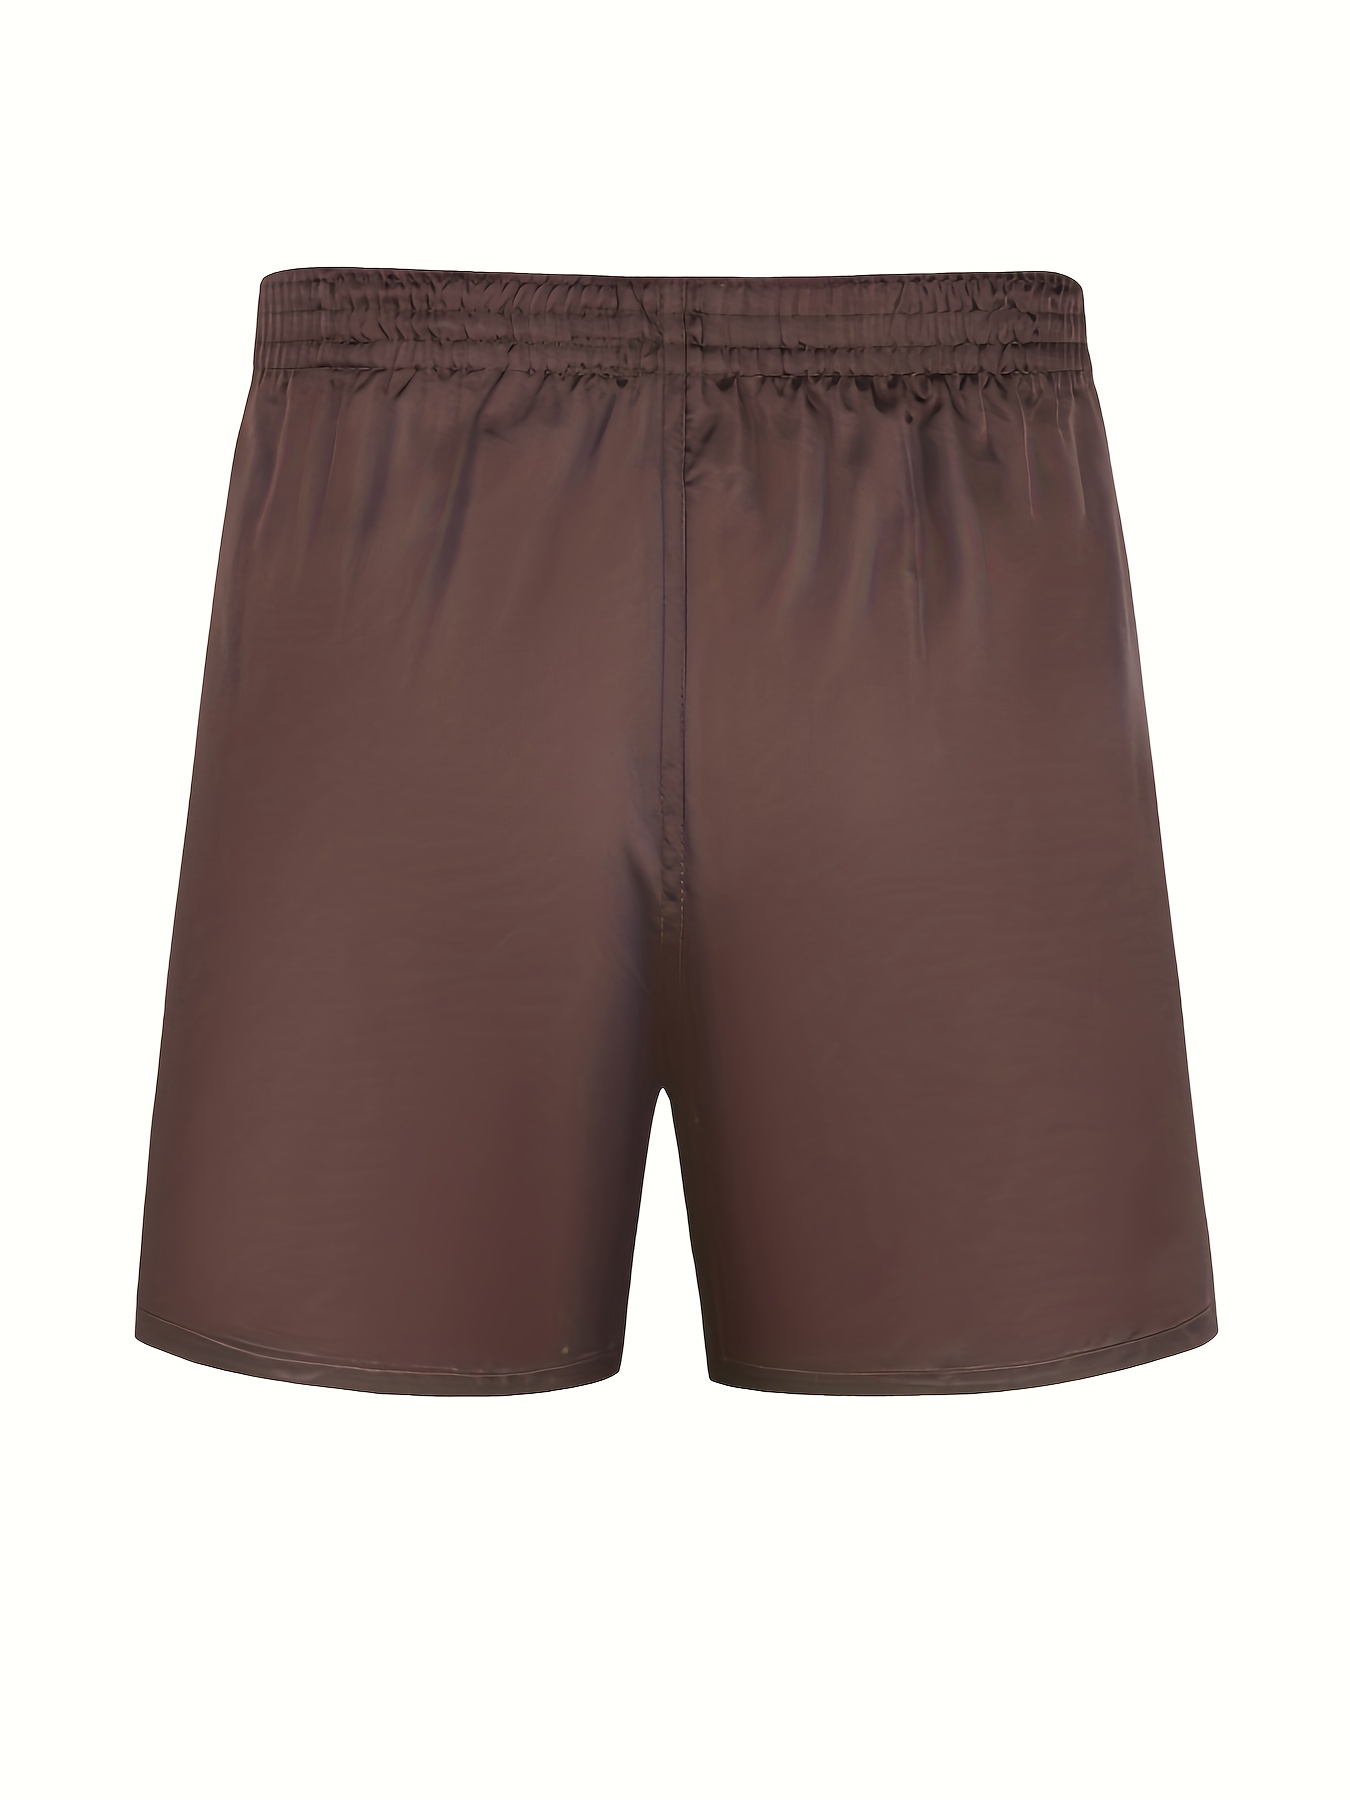 Buy Satin Shine Patch Boxer Shorts - Order Pajama Bottoms online